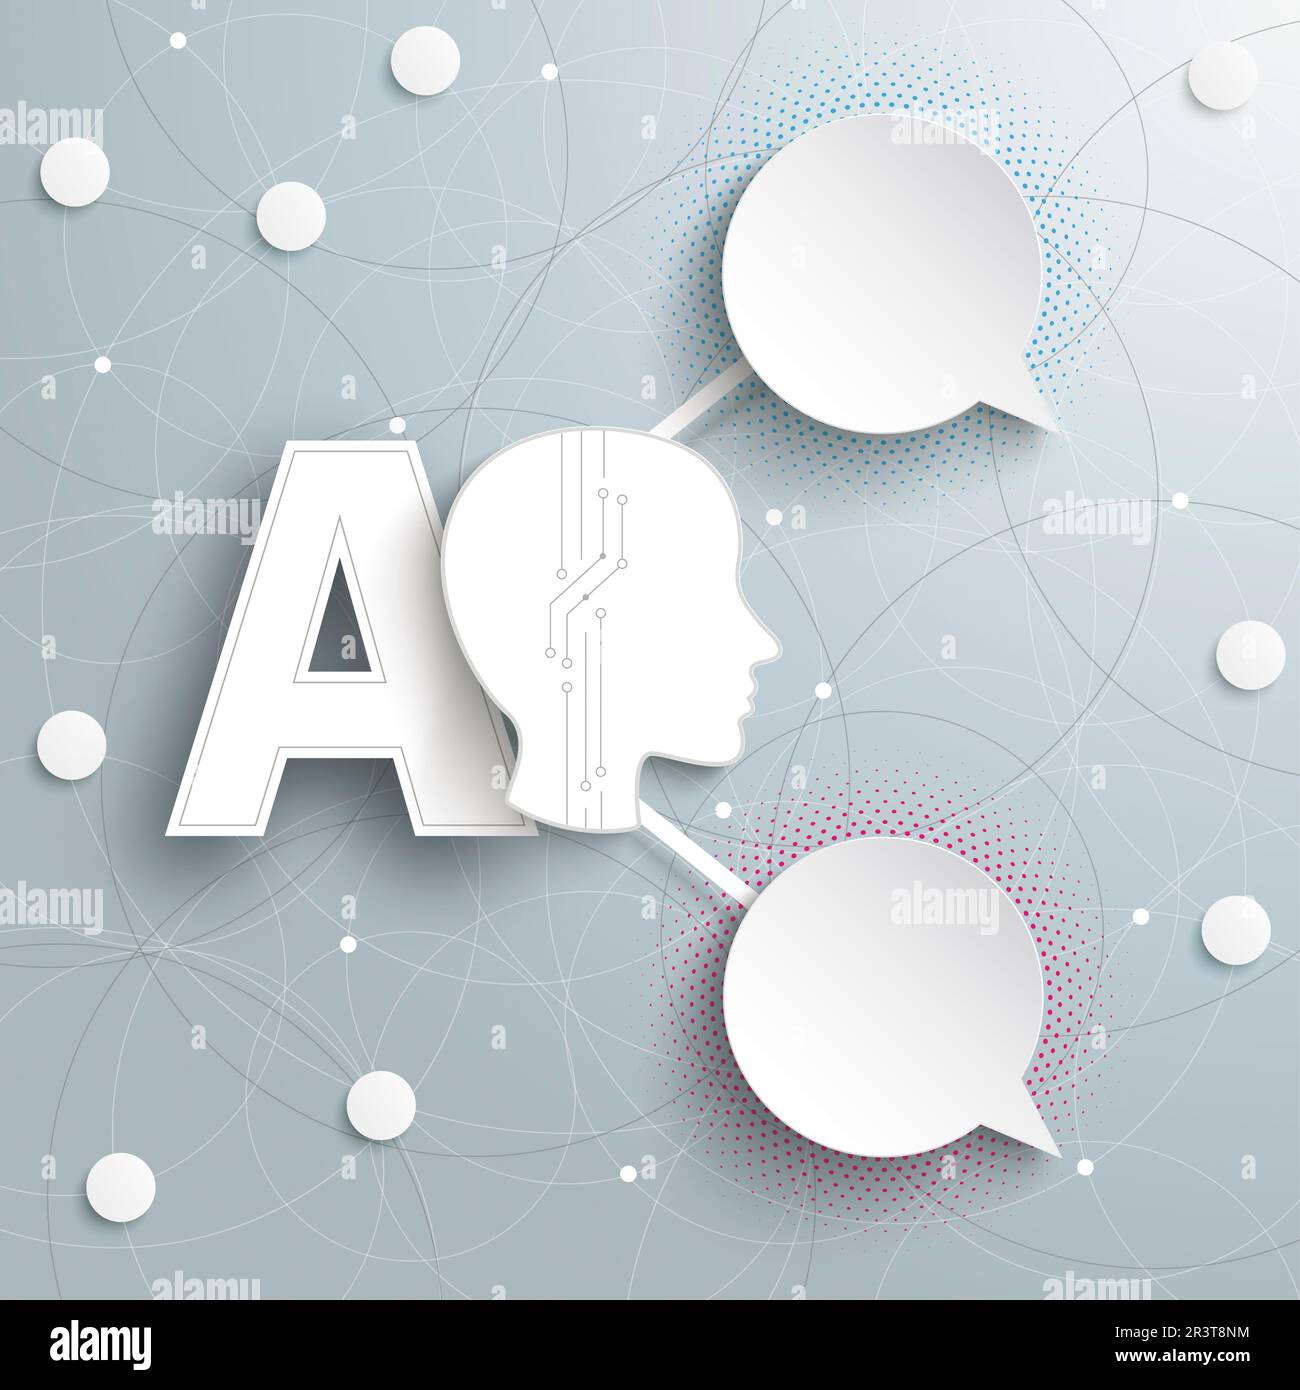 AI Speech Bubbles Networks Infographic Halftone Stock Photo